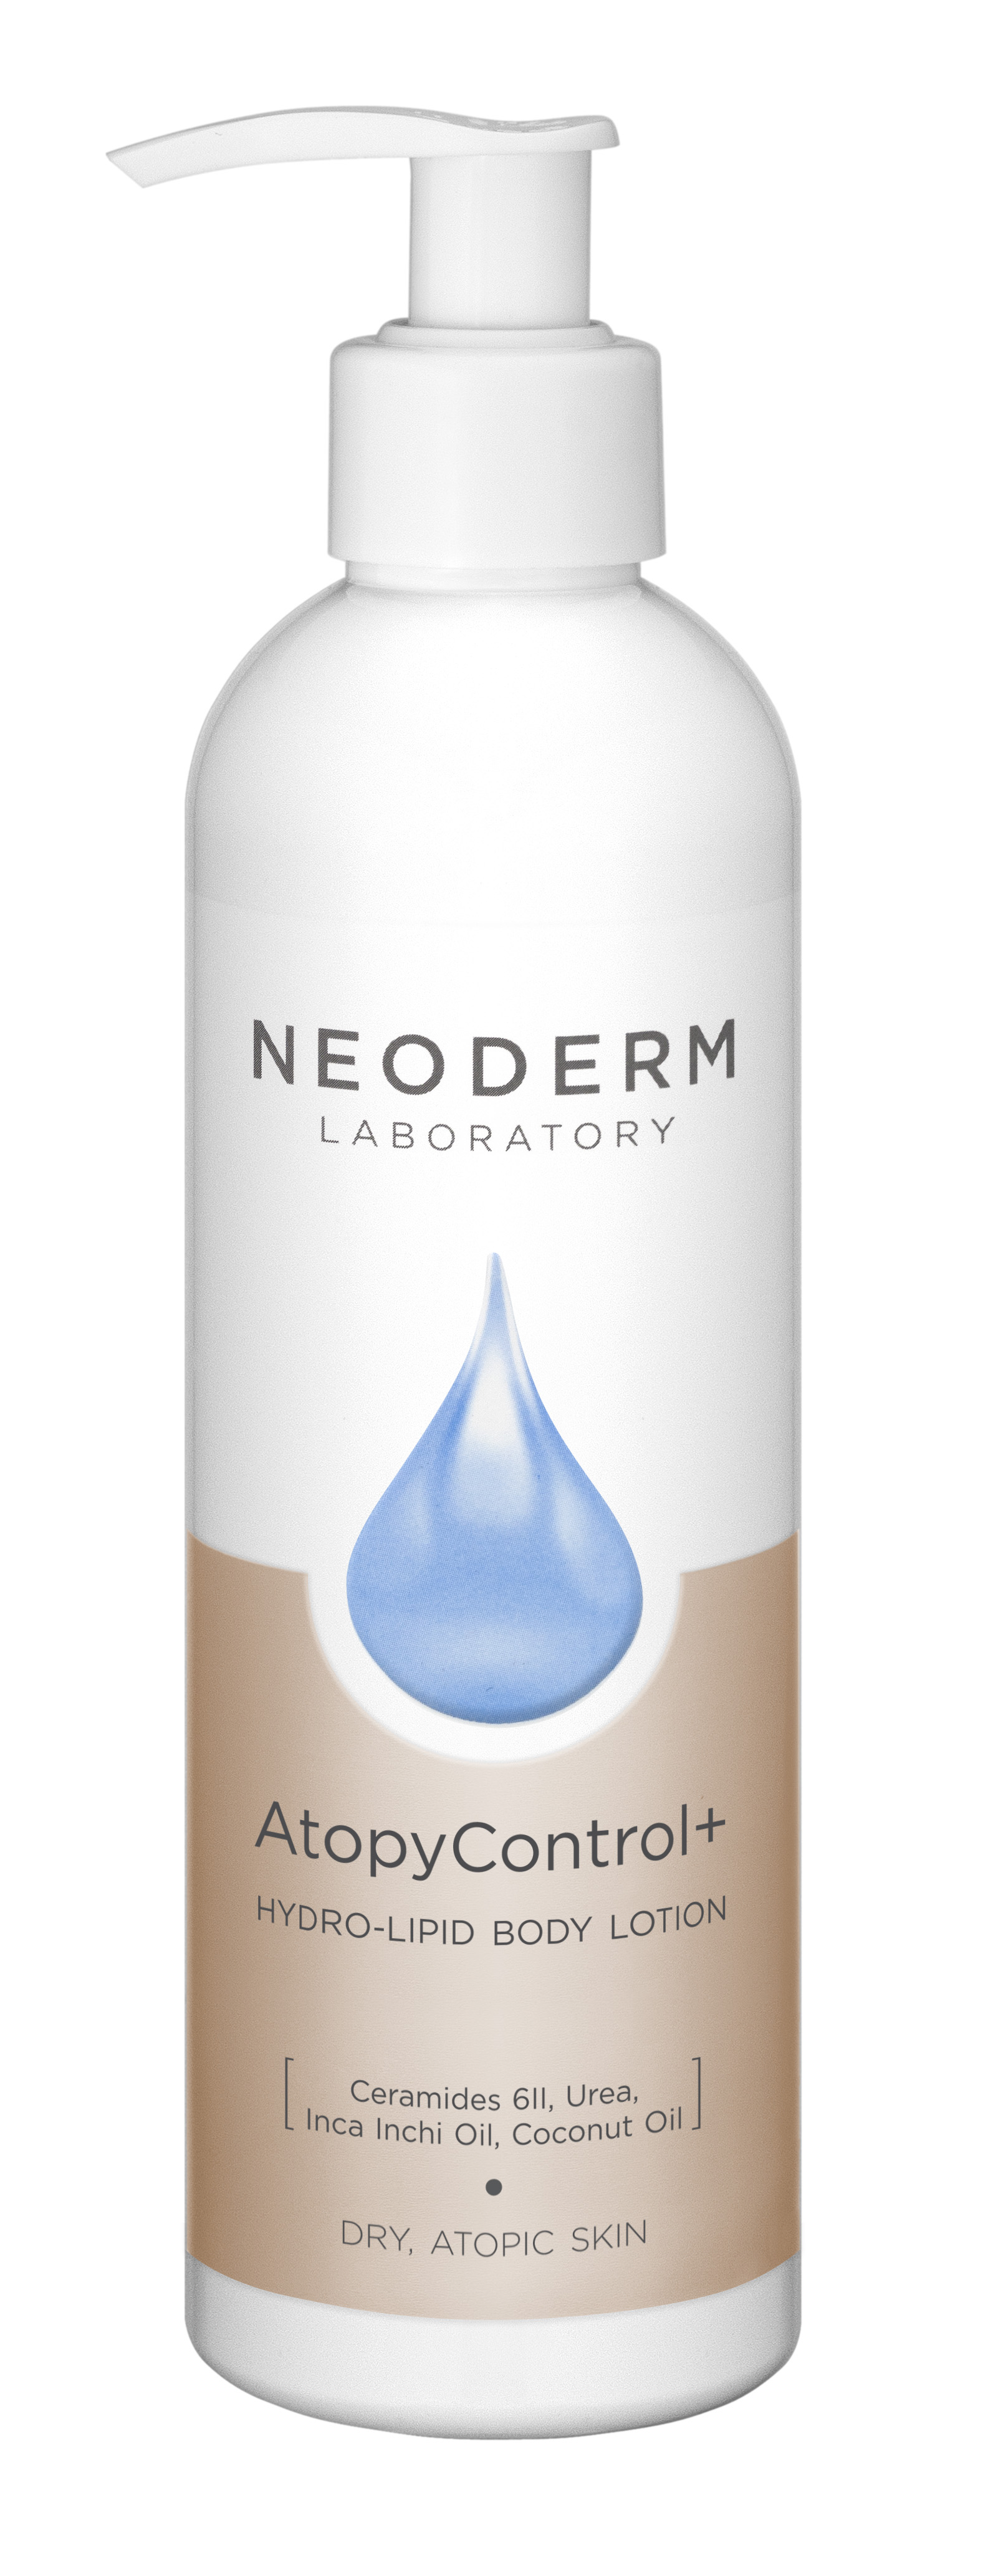 NEODERM Atopy Control Hydro-Lipid Body Lotion